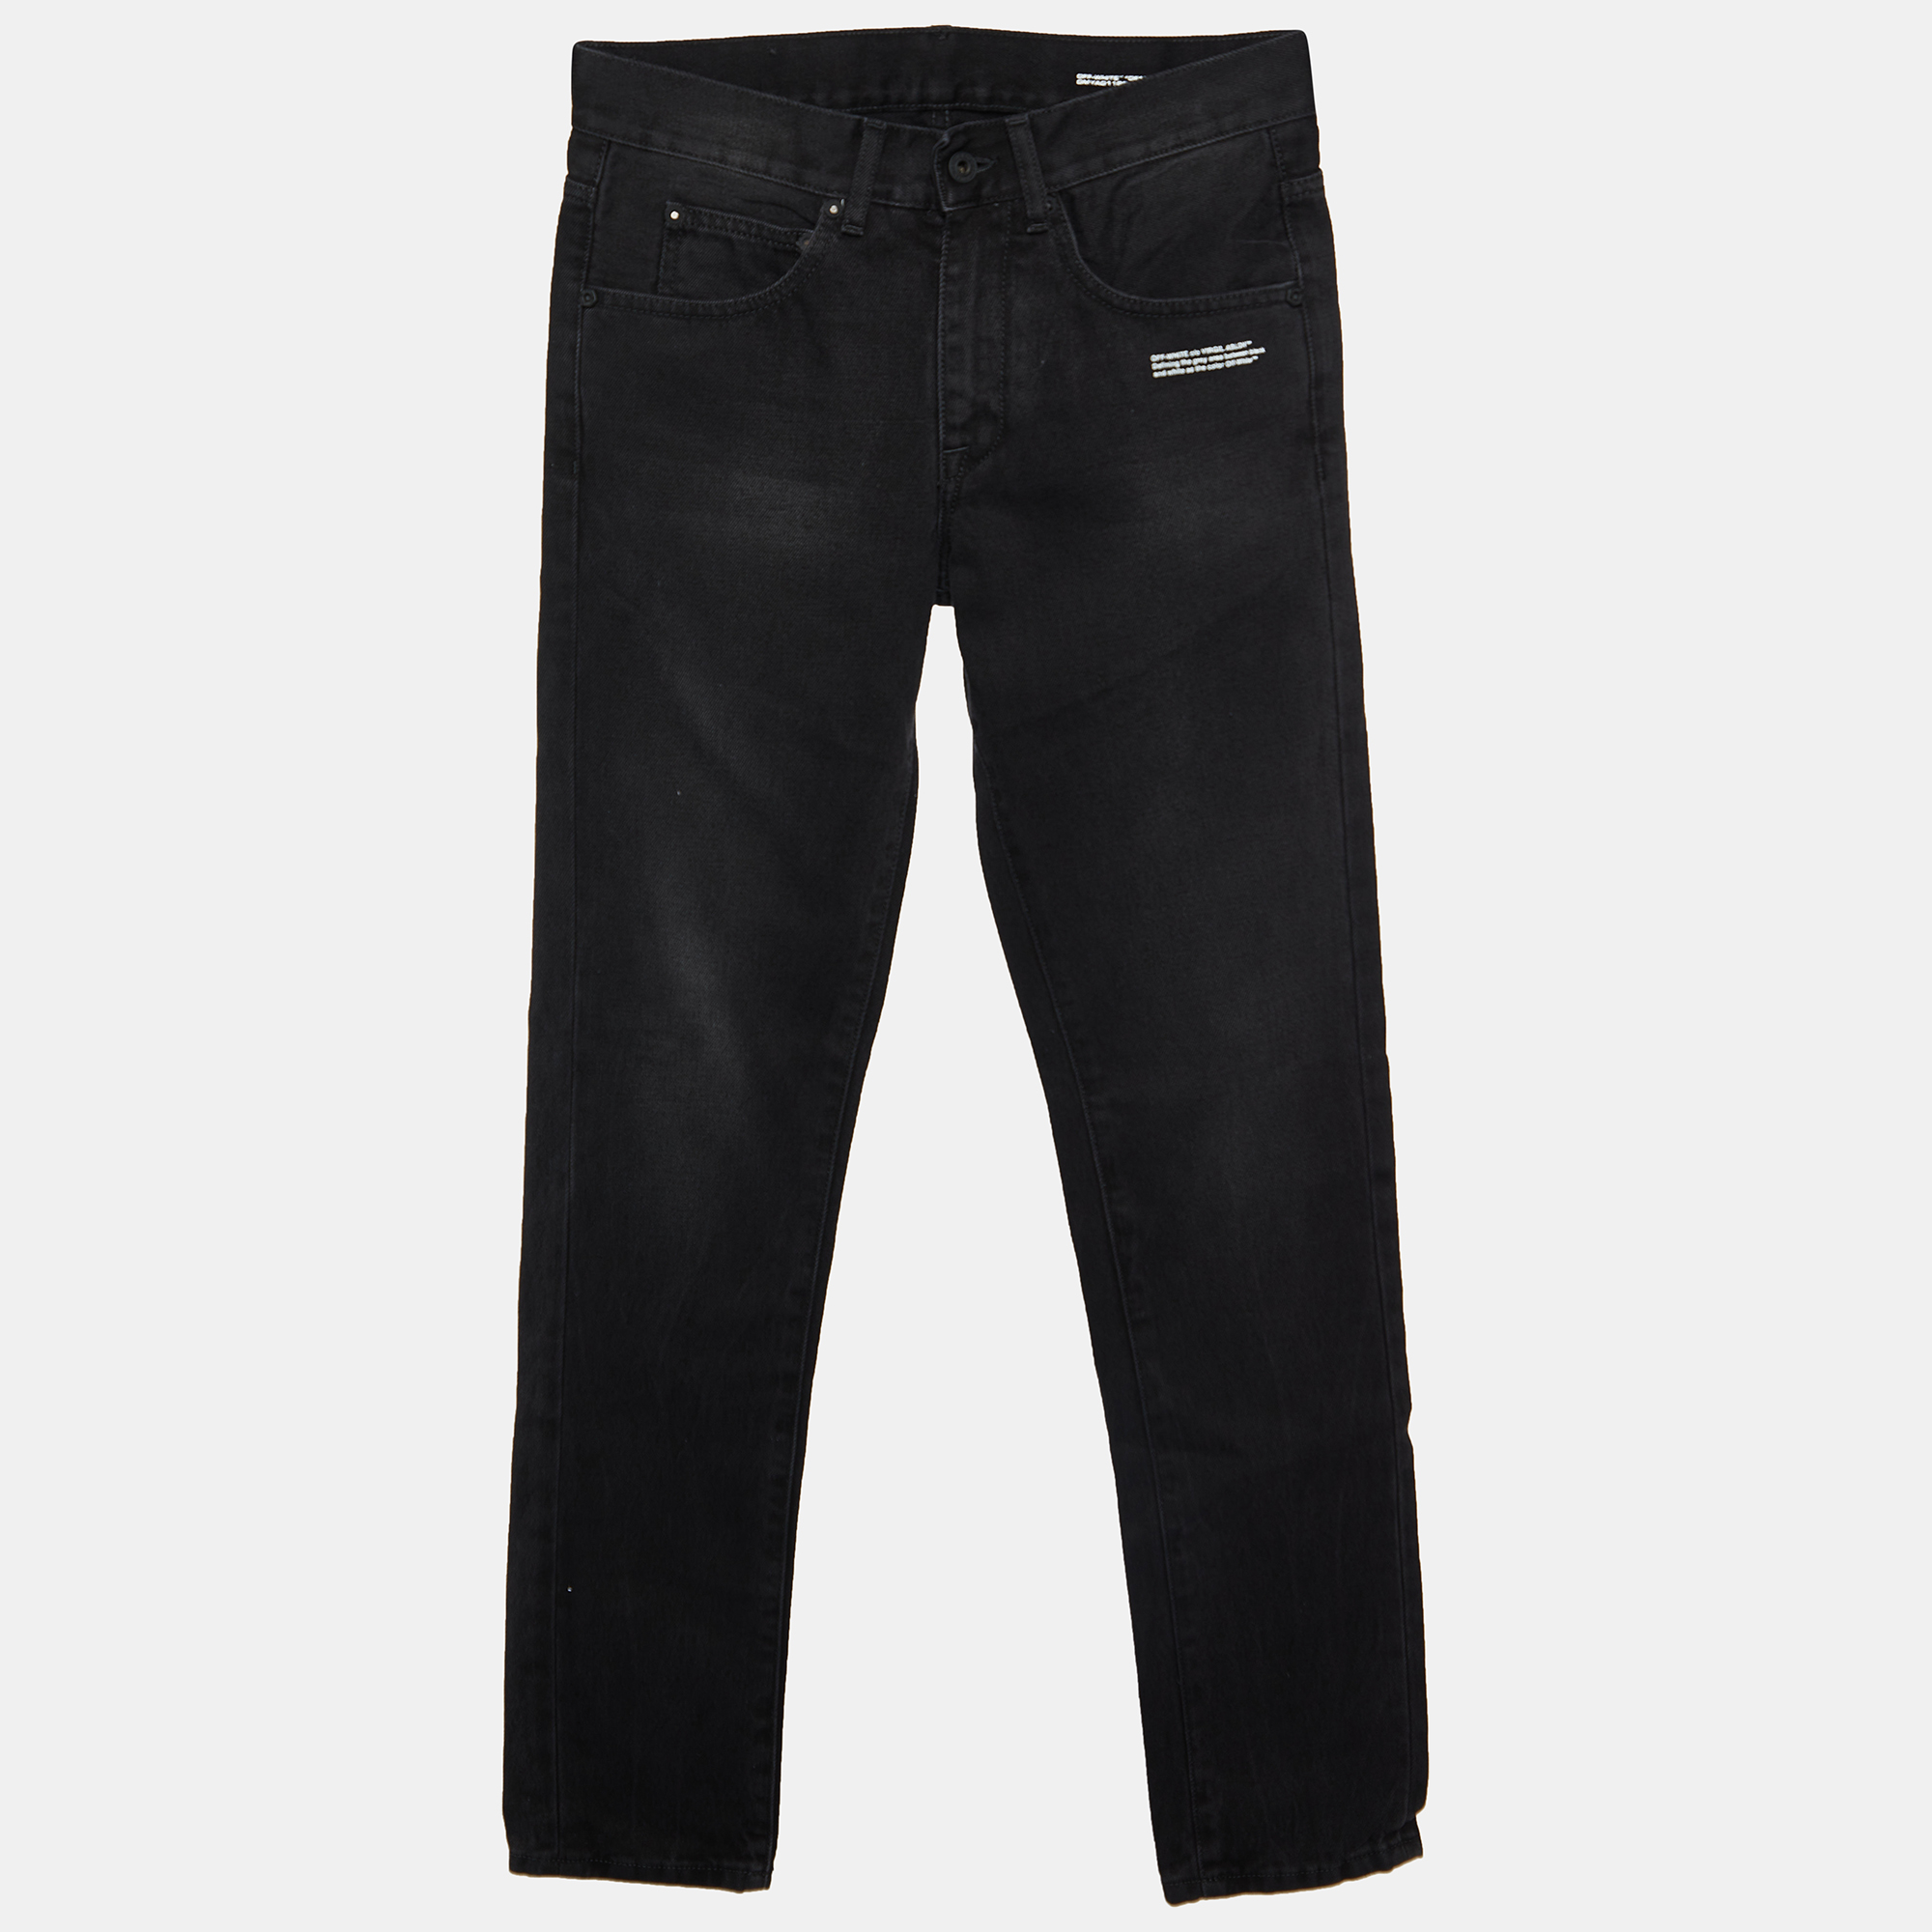 Off-white black denim logo detail slim fit jeans s/waist 31"